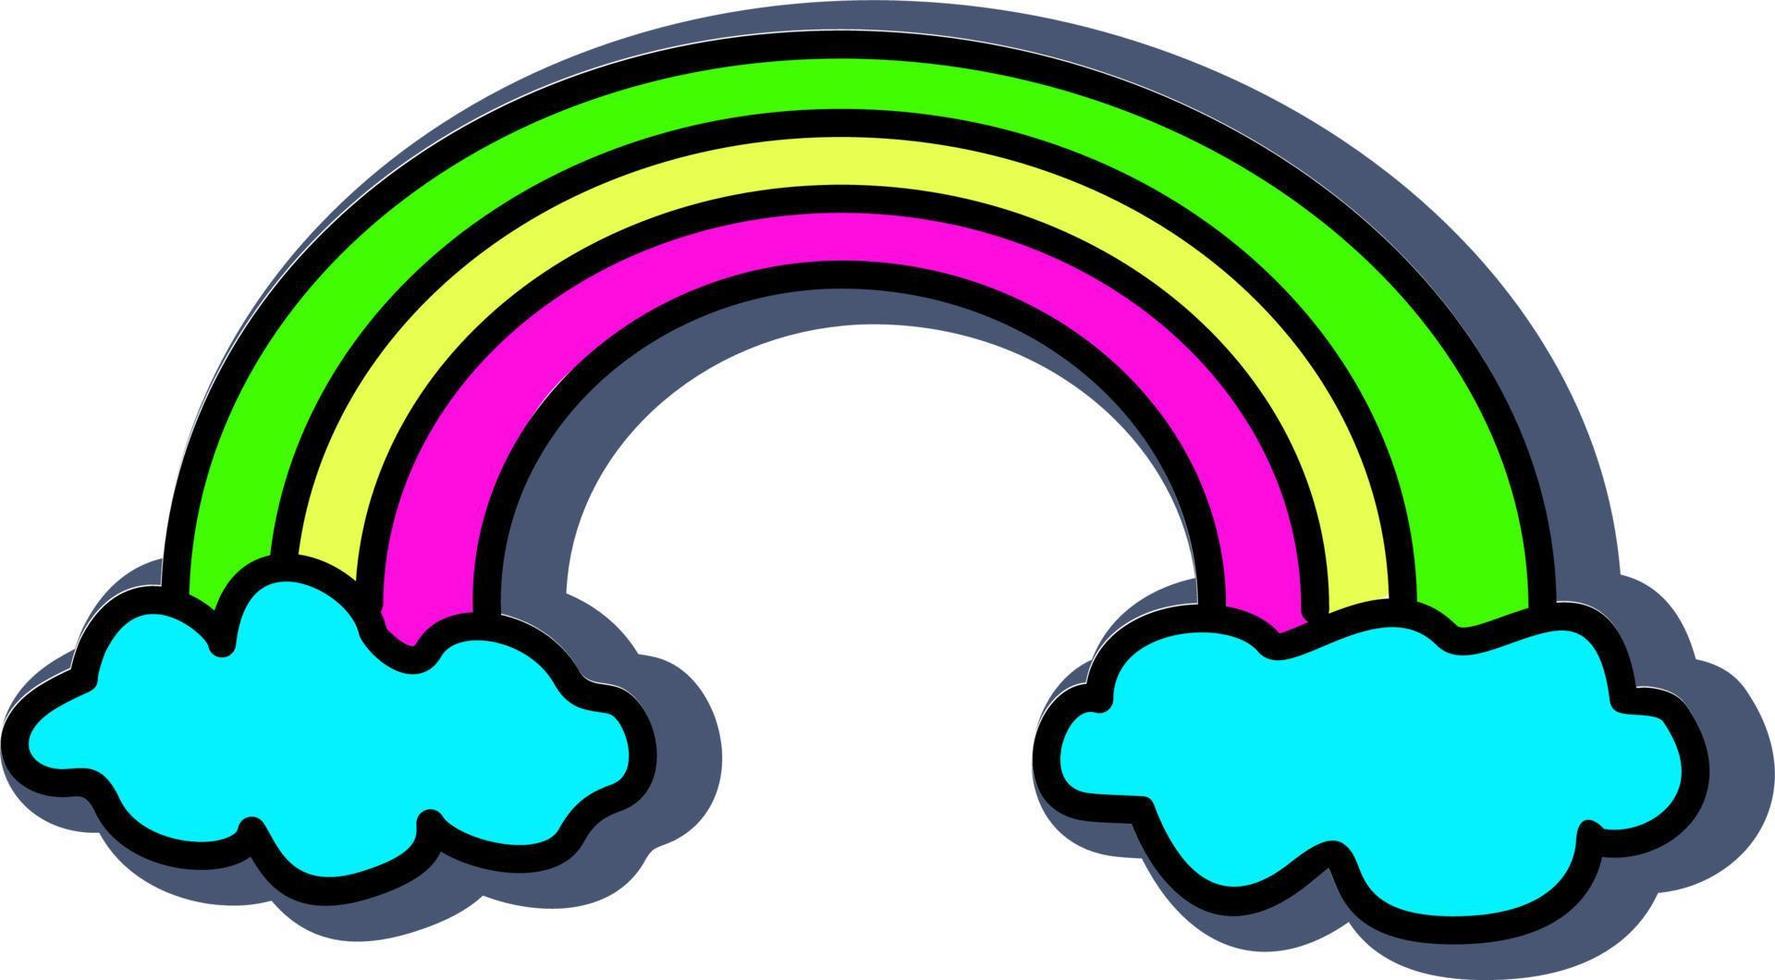 Wolke mit Regenbogensymbol. Aufkleber. psychedelischer retro Regenbogen surrealer Elementaufkleber vektor